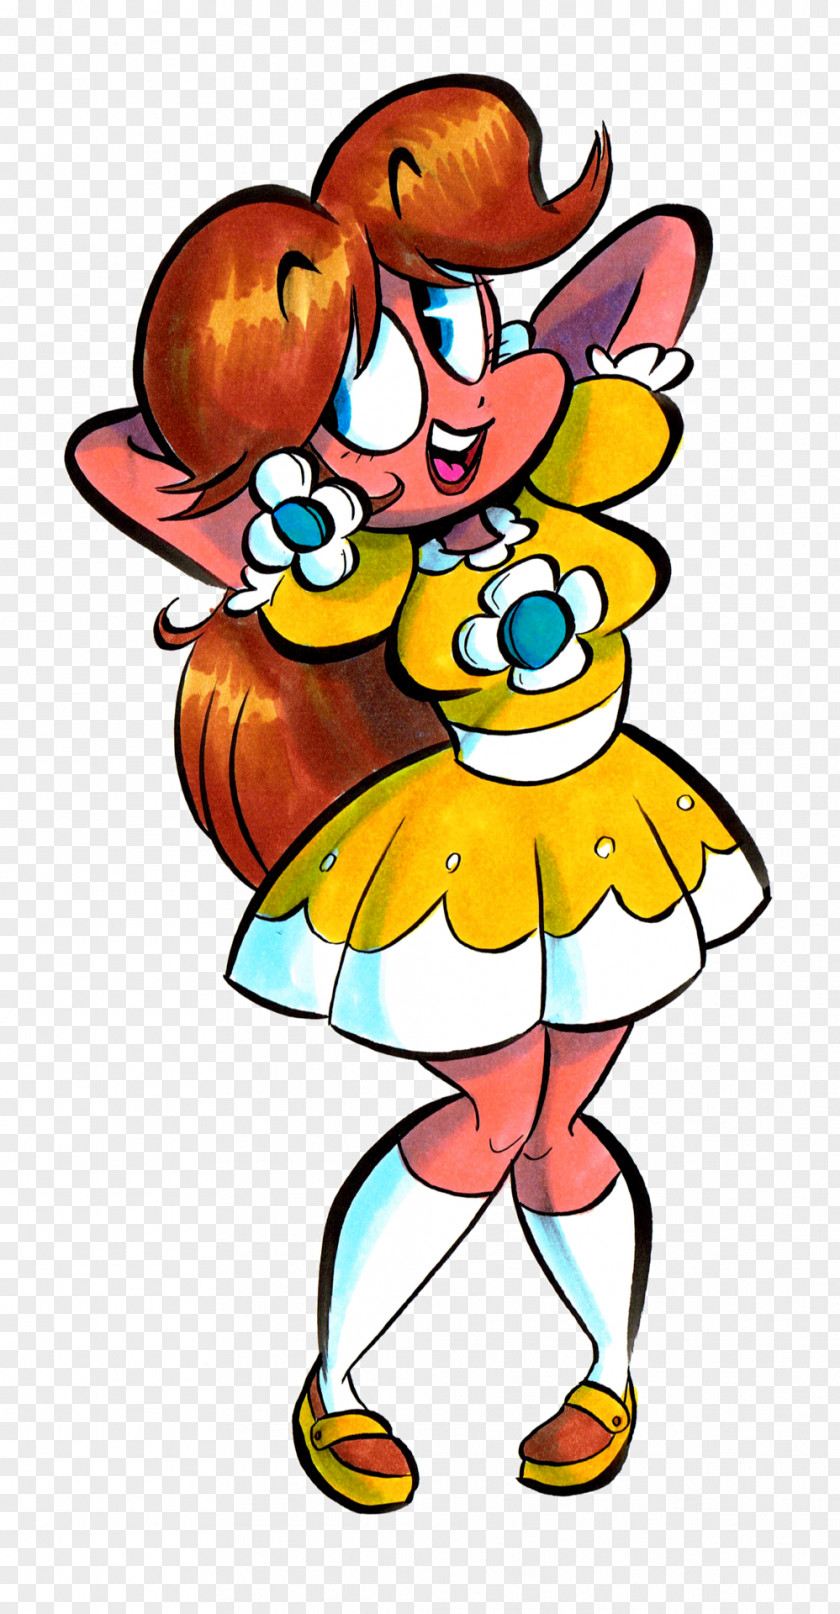 Mario Tennis Peach Bros. Princess Daisy PNG